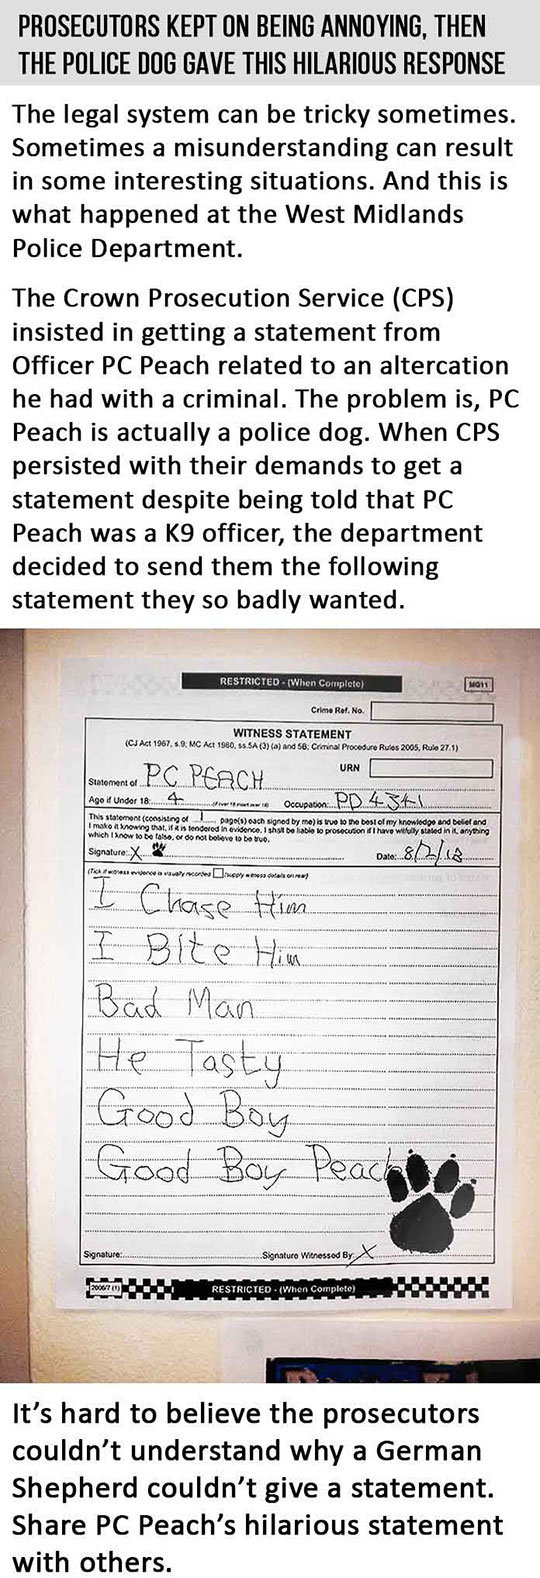 Police Dog Genius Response